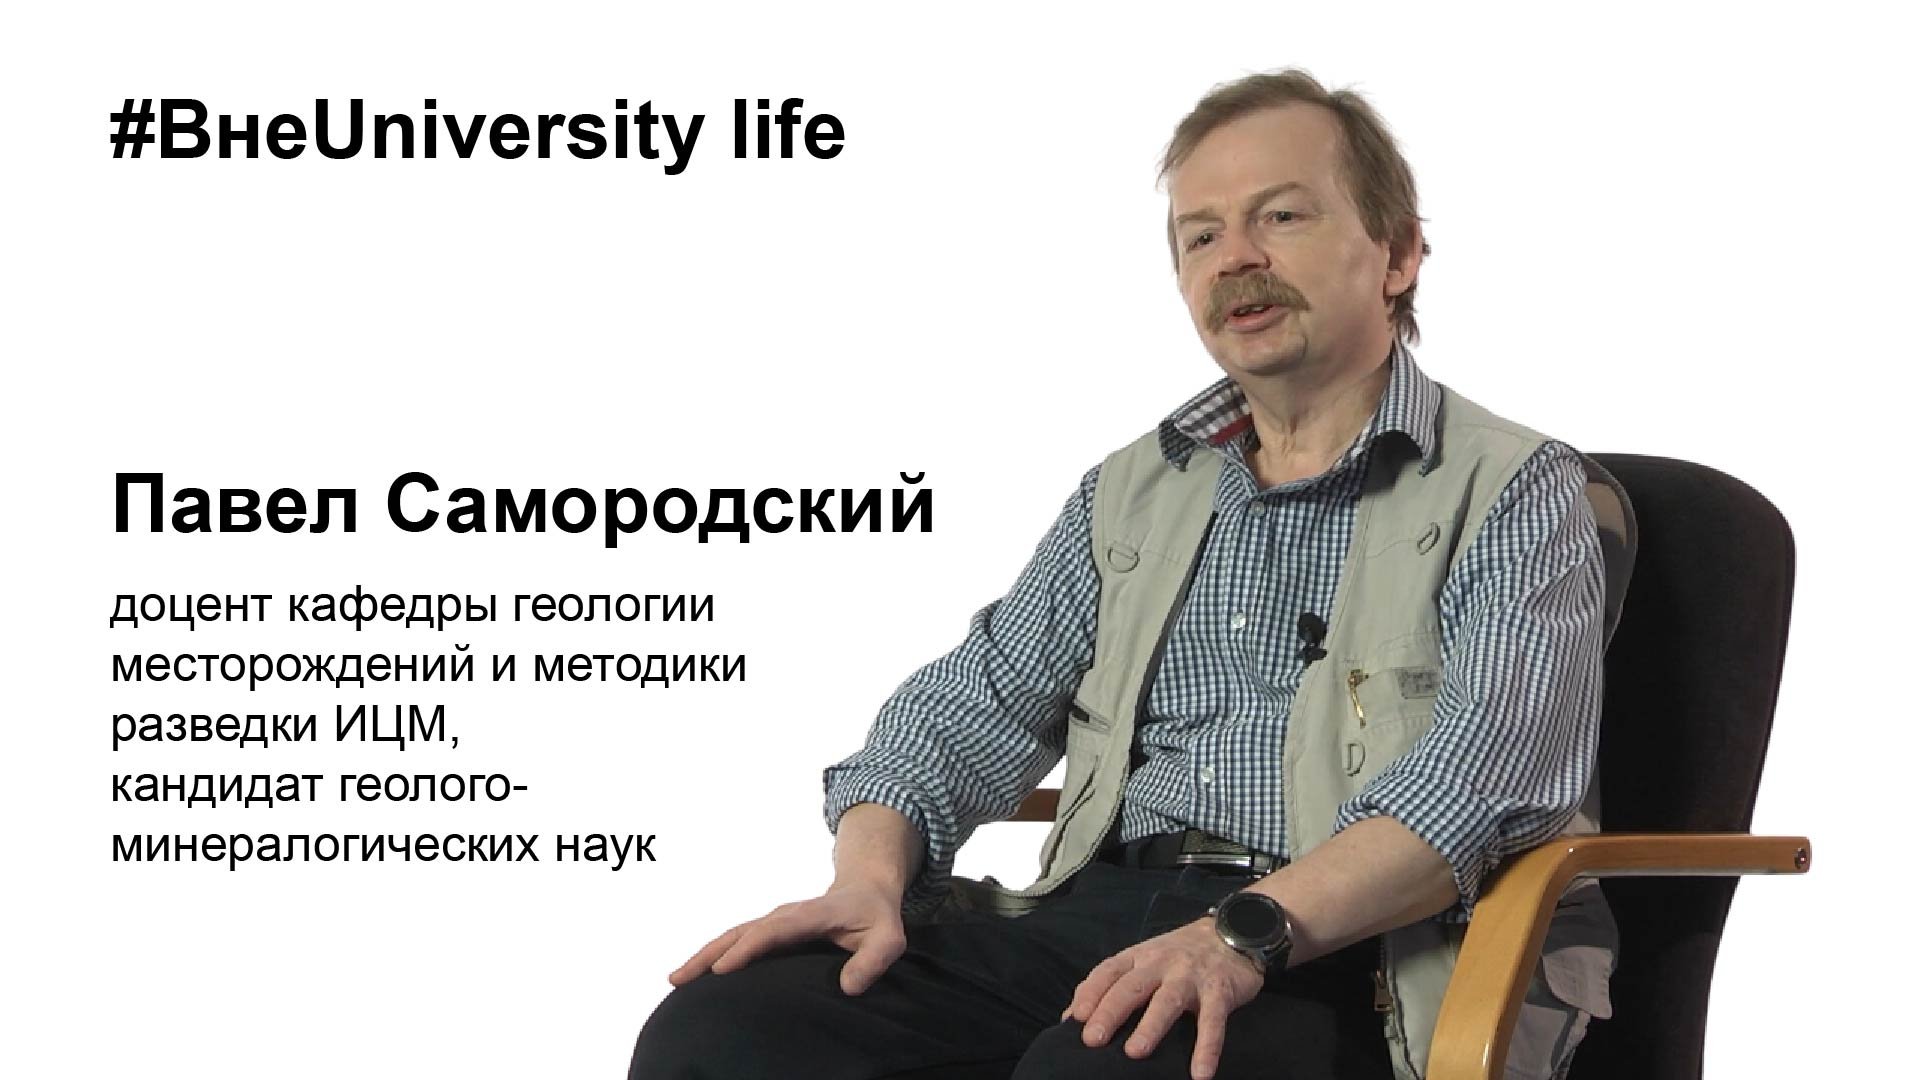 ВнеUniversity life: Павел Самородский, ИЦМ